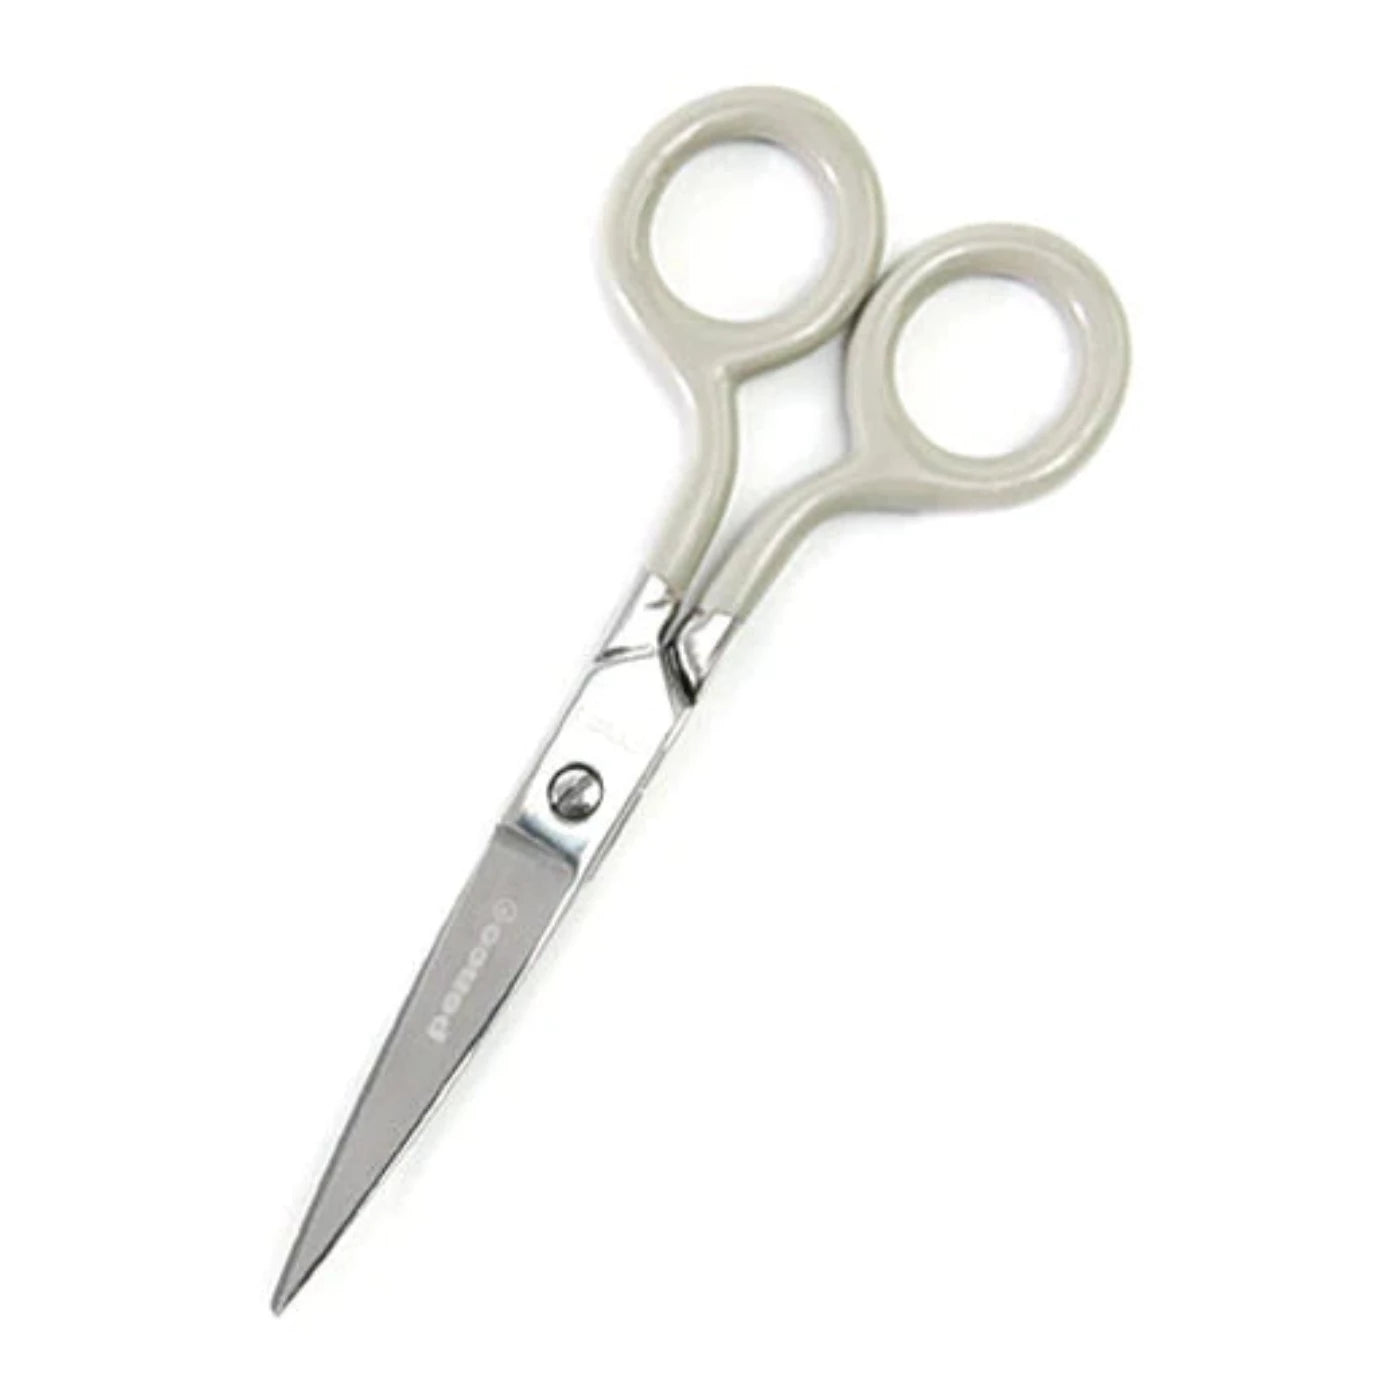 Penco Small Stainless Steel Scissors, Ivory